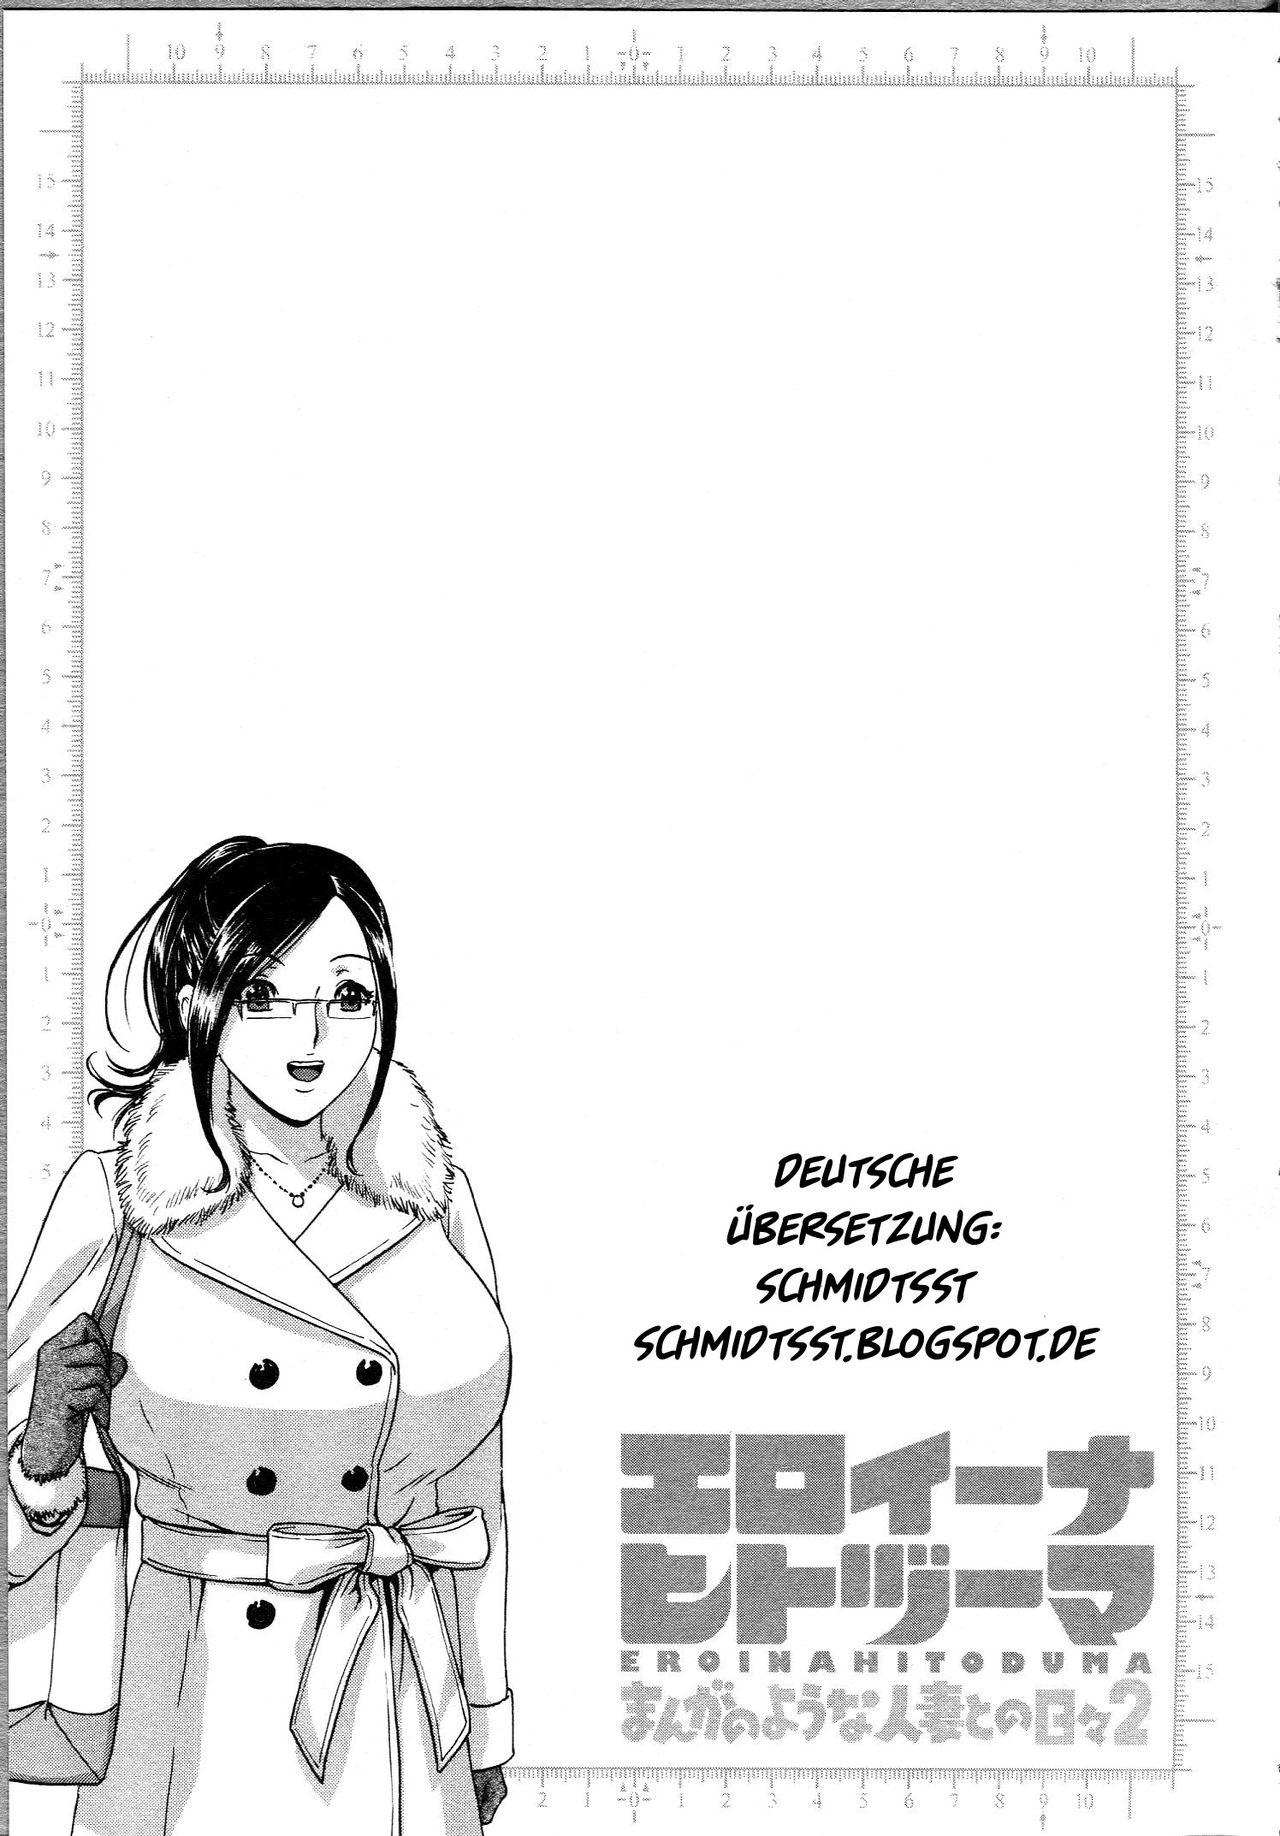 [Hidemaru] Eroina Hitoduma - Manga no youna Hitozuma to no Hibi 2 | Life with Married Women Just Like a Manga 2 [German] [SchmidtSST] 60